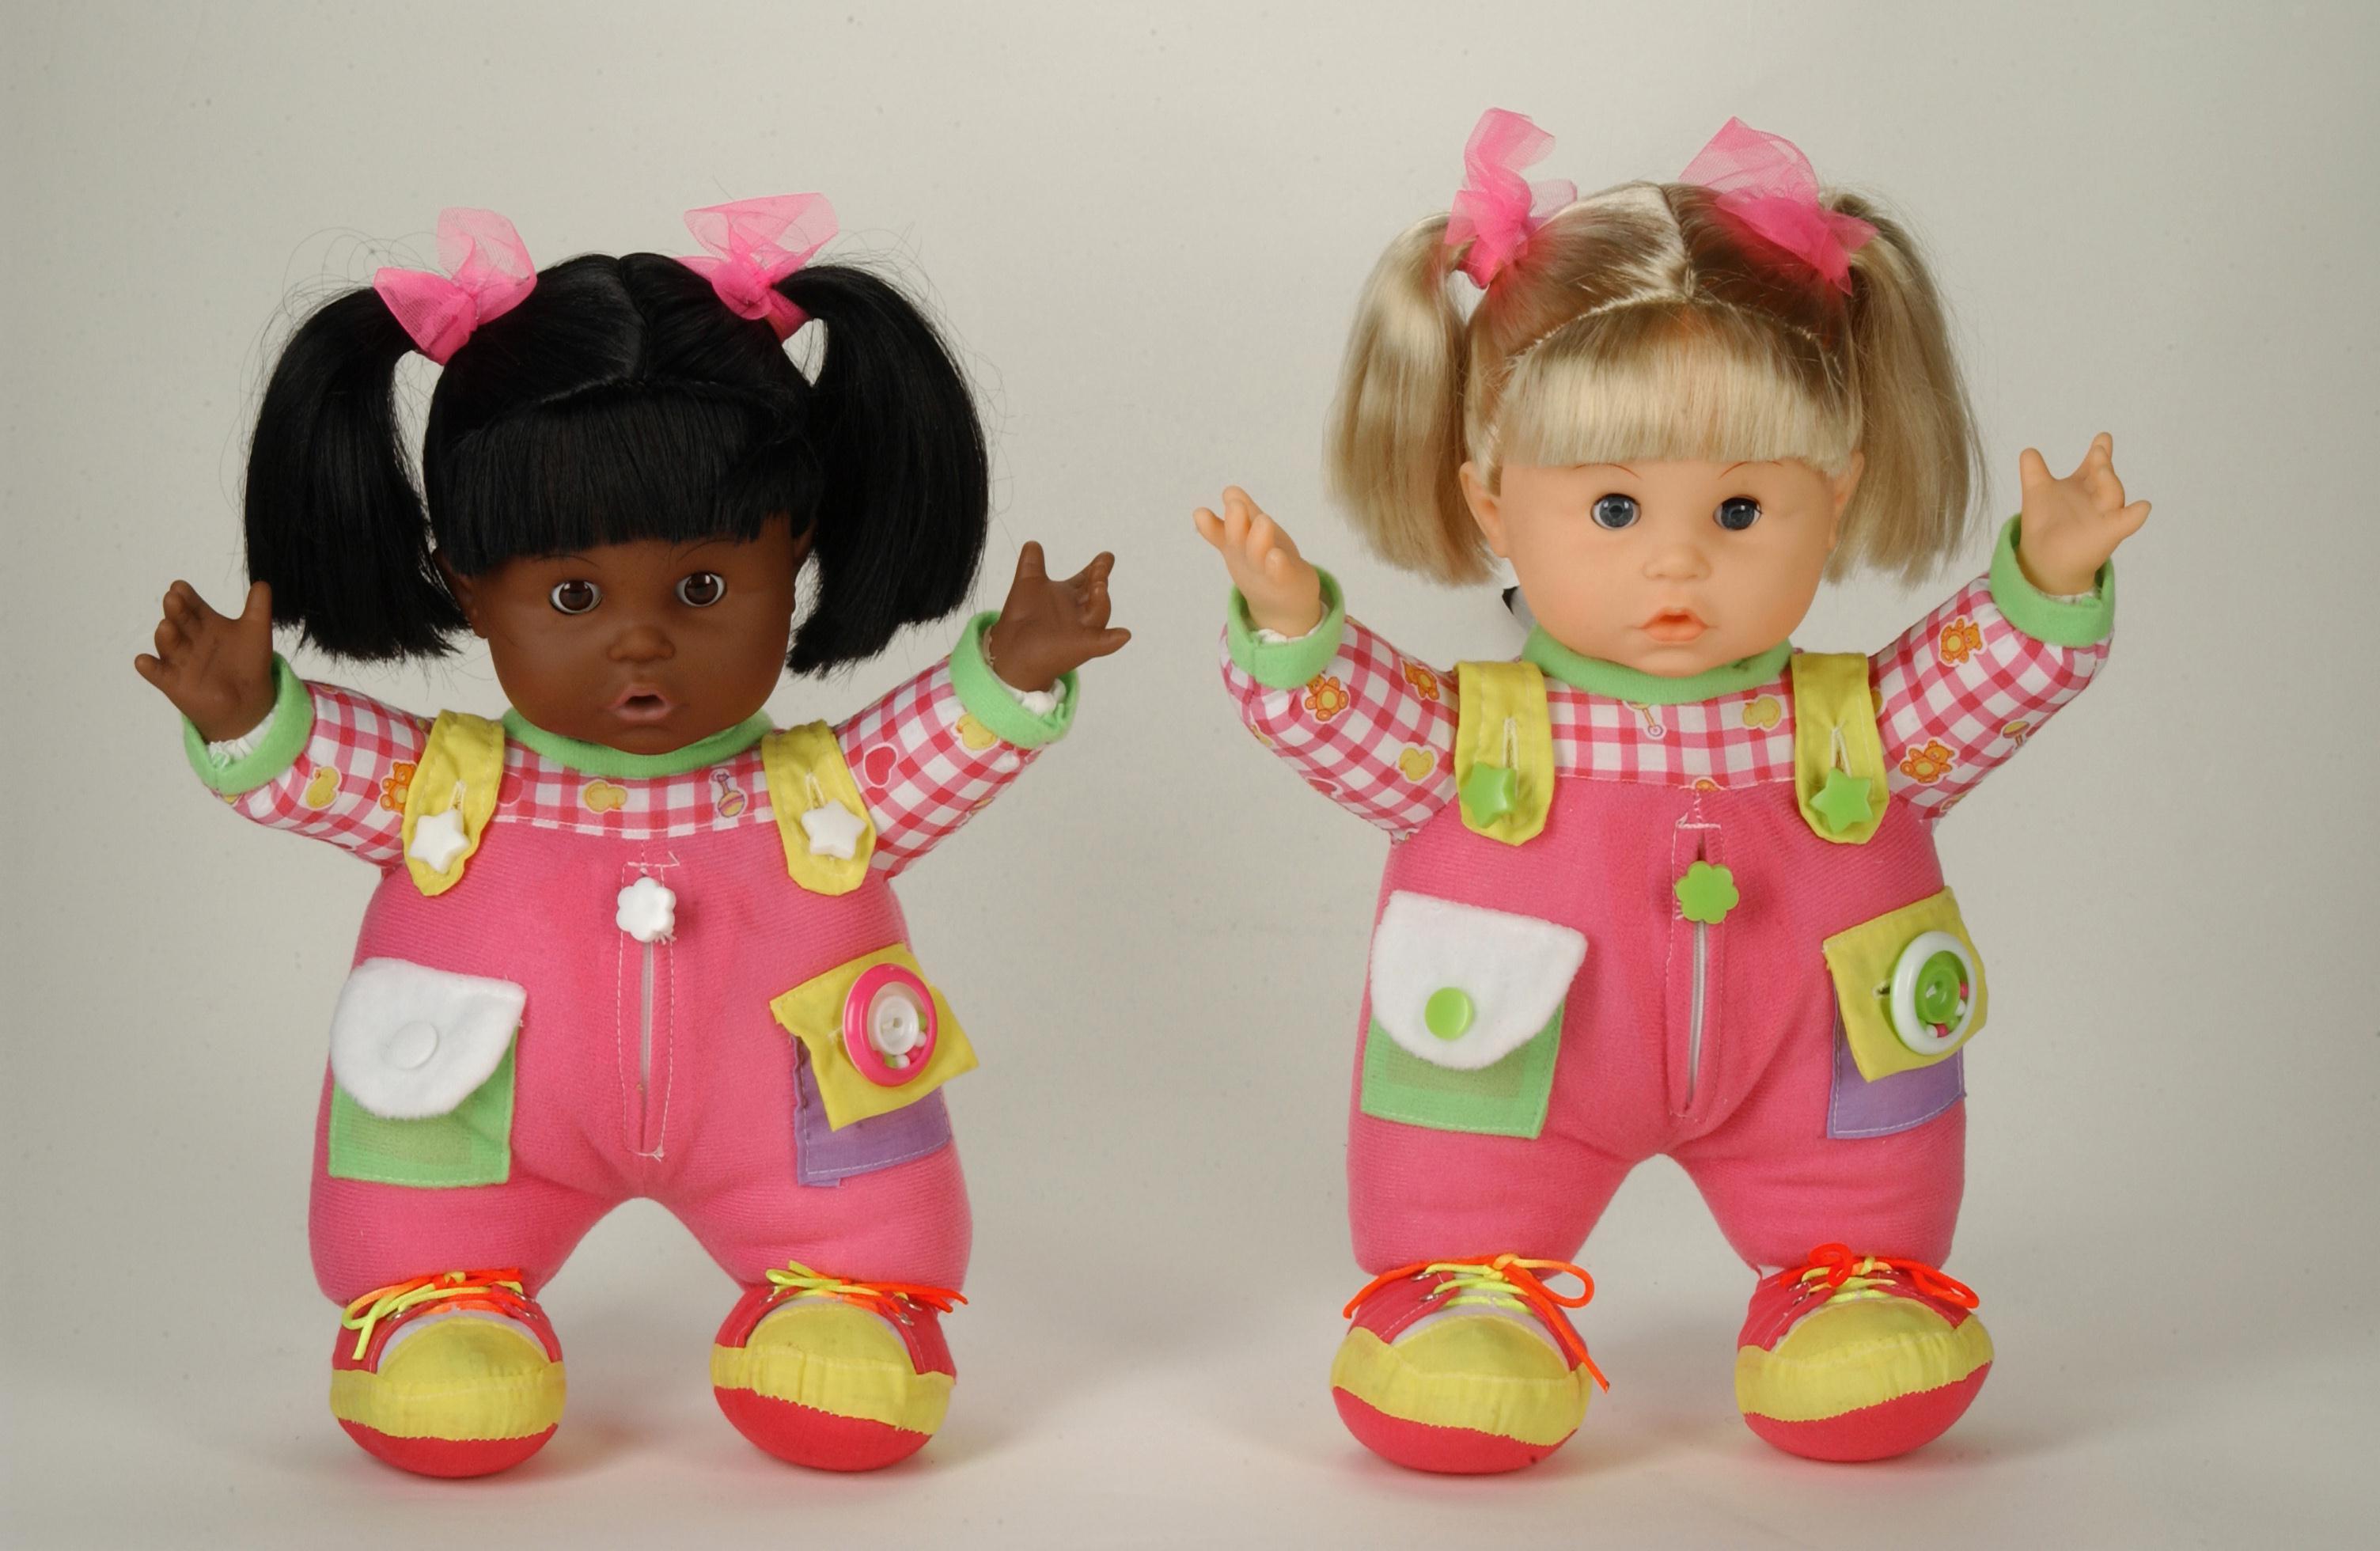 Toy co. Игрушки и куклы. Кукла ю. Кукла UD. Co. Inc. JIAOU Doll куклы.